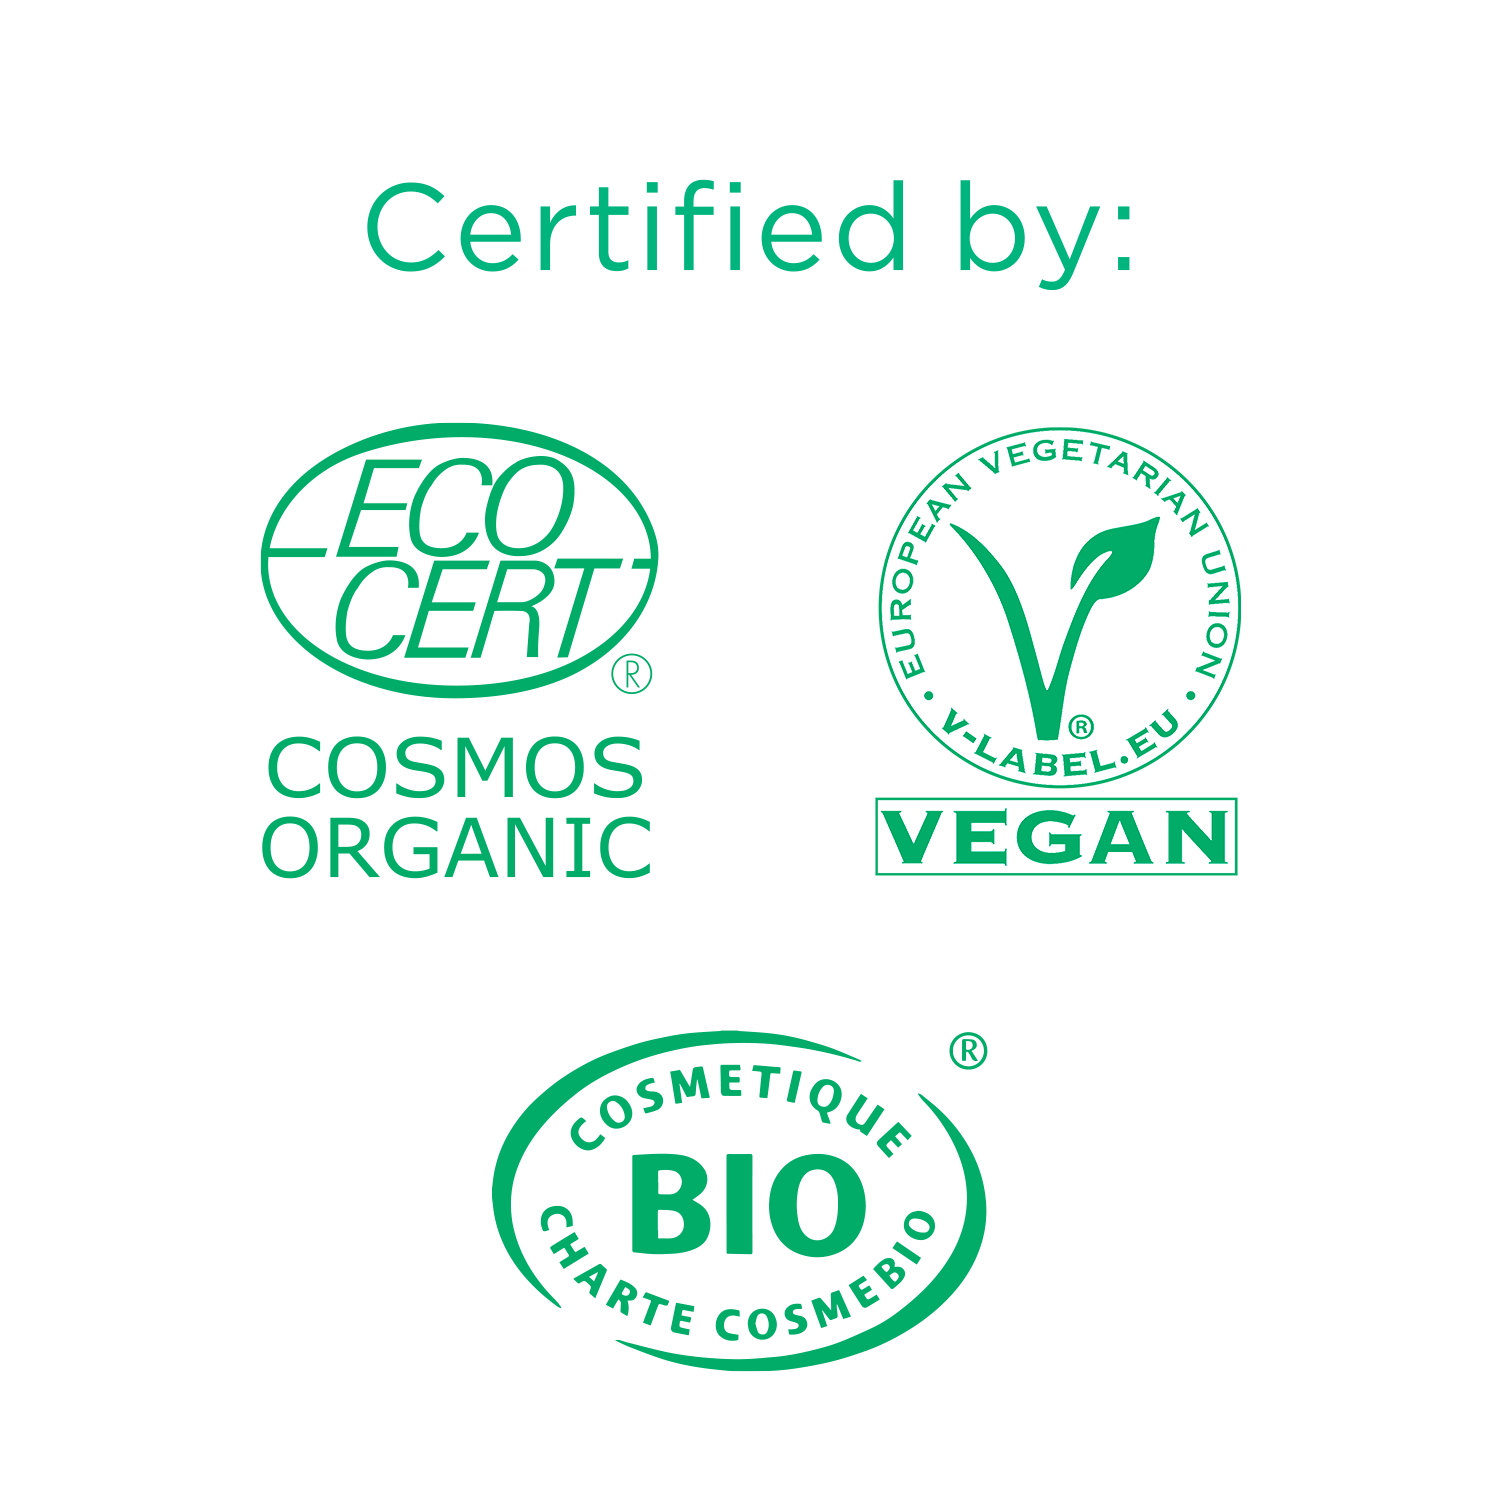 Cerca certificazioni biologiche come: Cosmetique Charte Cosmebio, EcoCert, Vegan European Vegeterian Union